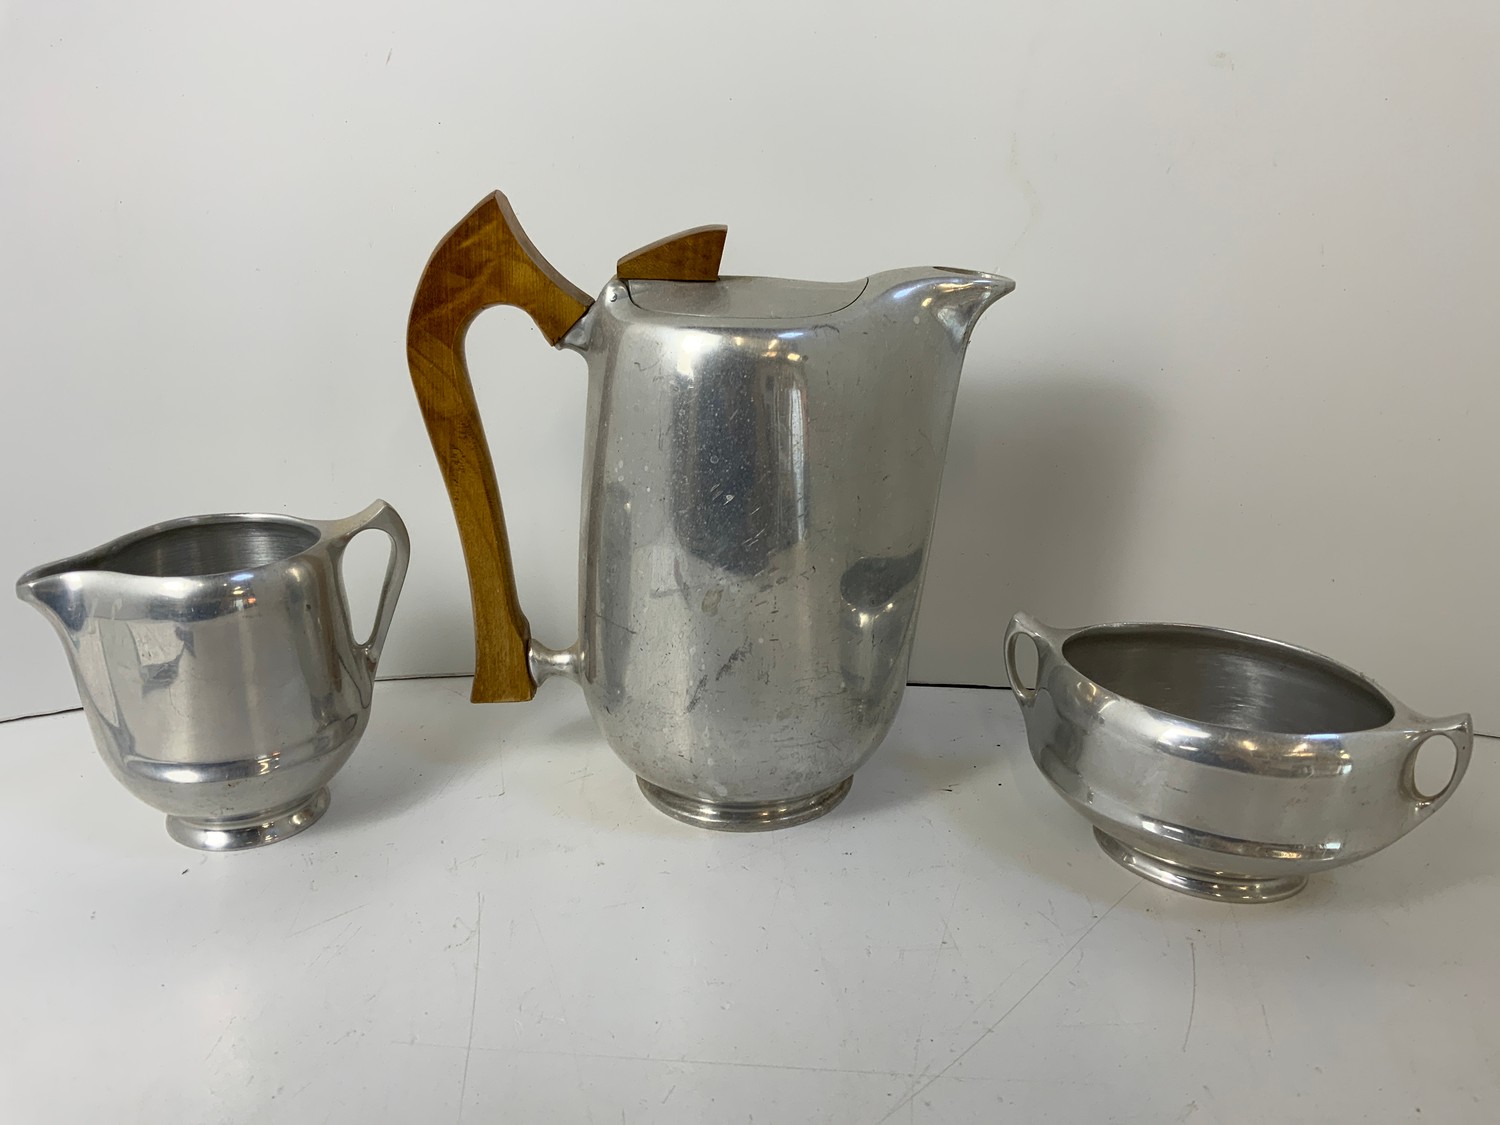 Picquot Ware Coffee Pot Sugar Bowl and Milk Jug